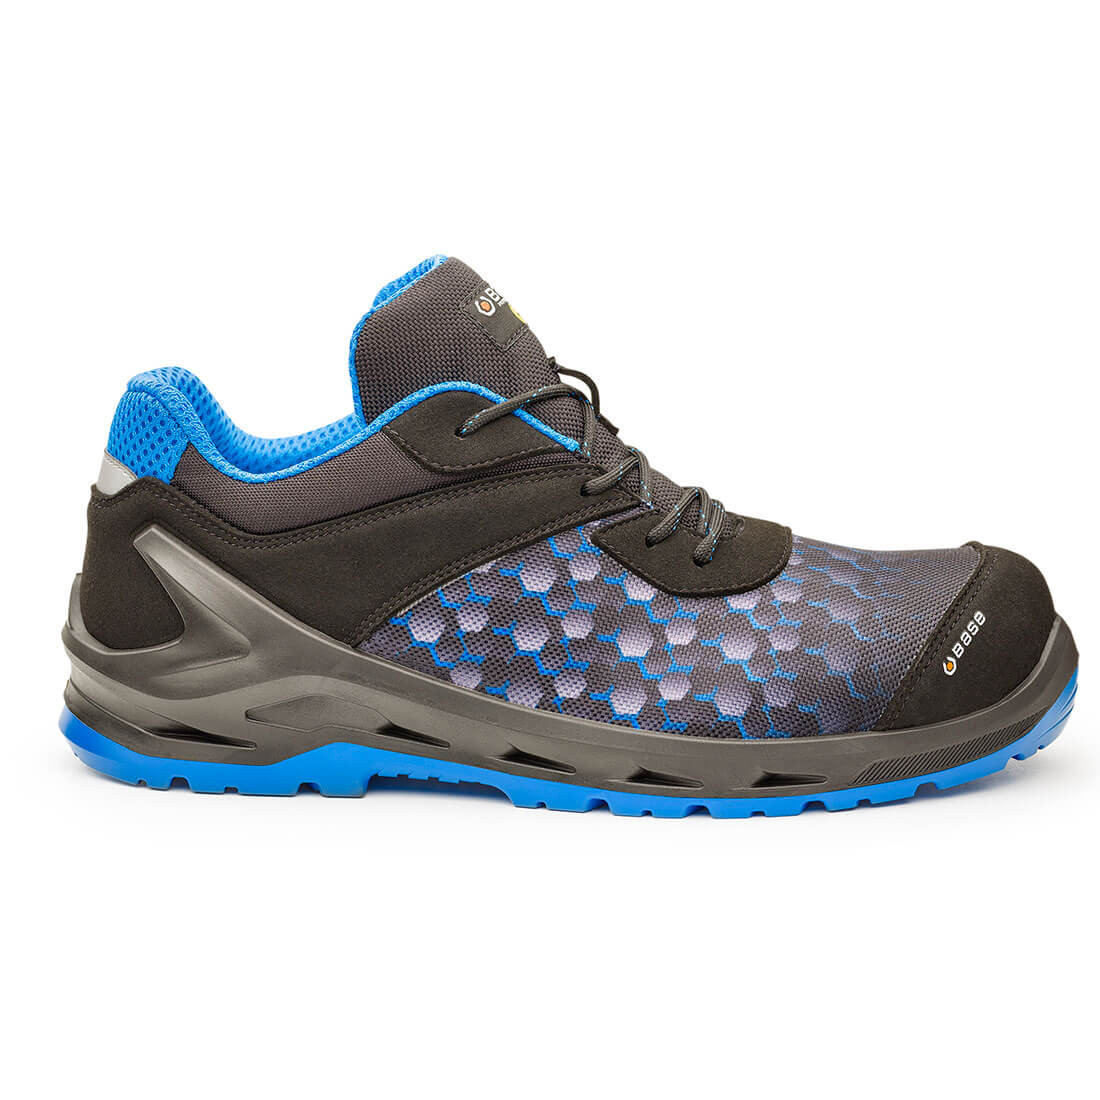 Pantofi i-Robox Blue S3 ESD SRC - Incaltaminte de protectie | Bocanci, Pantofi, Sandale, Cizme